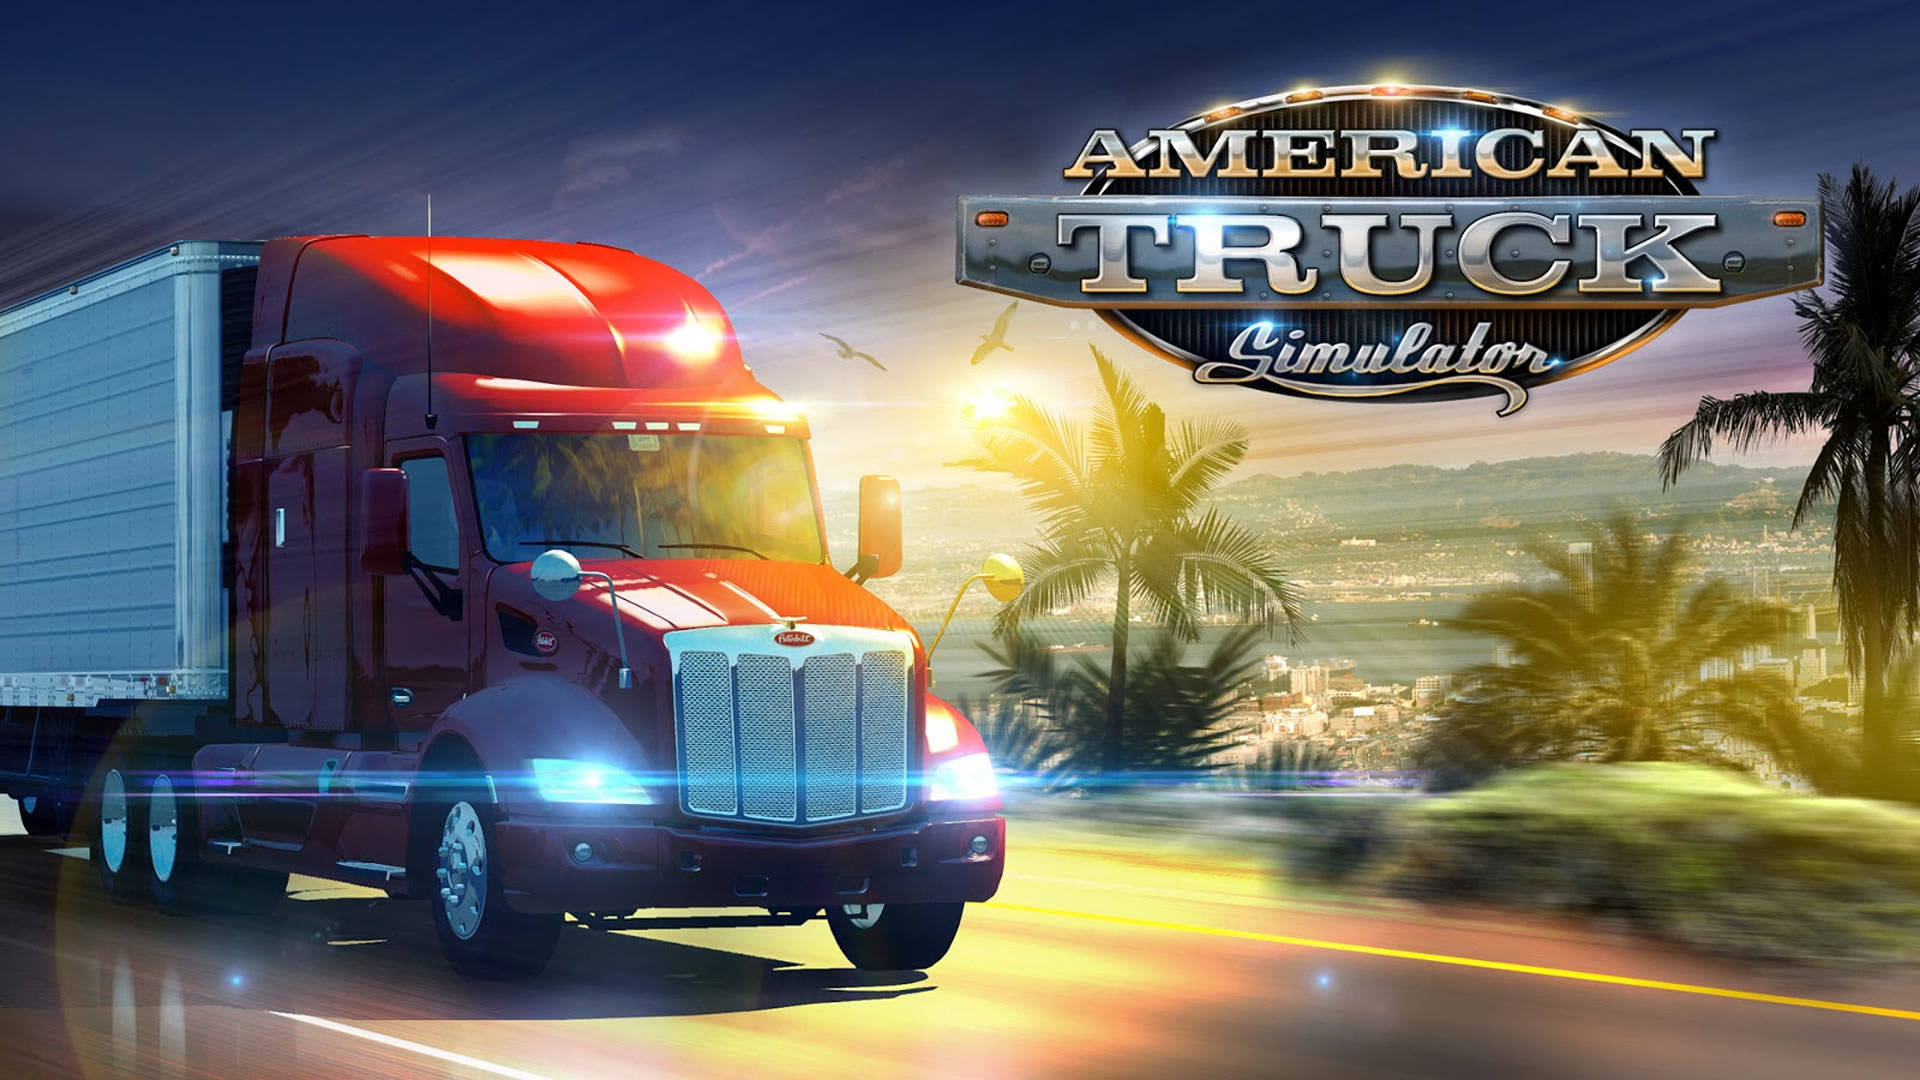 American Truck Simulator Glossy Red Truck